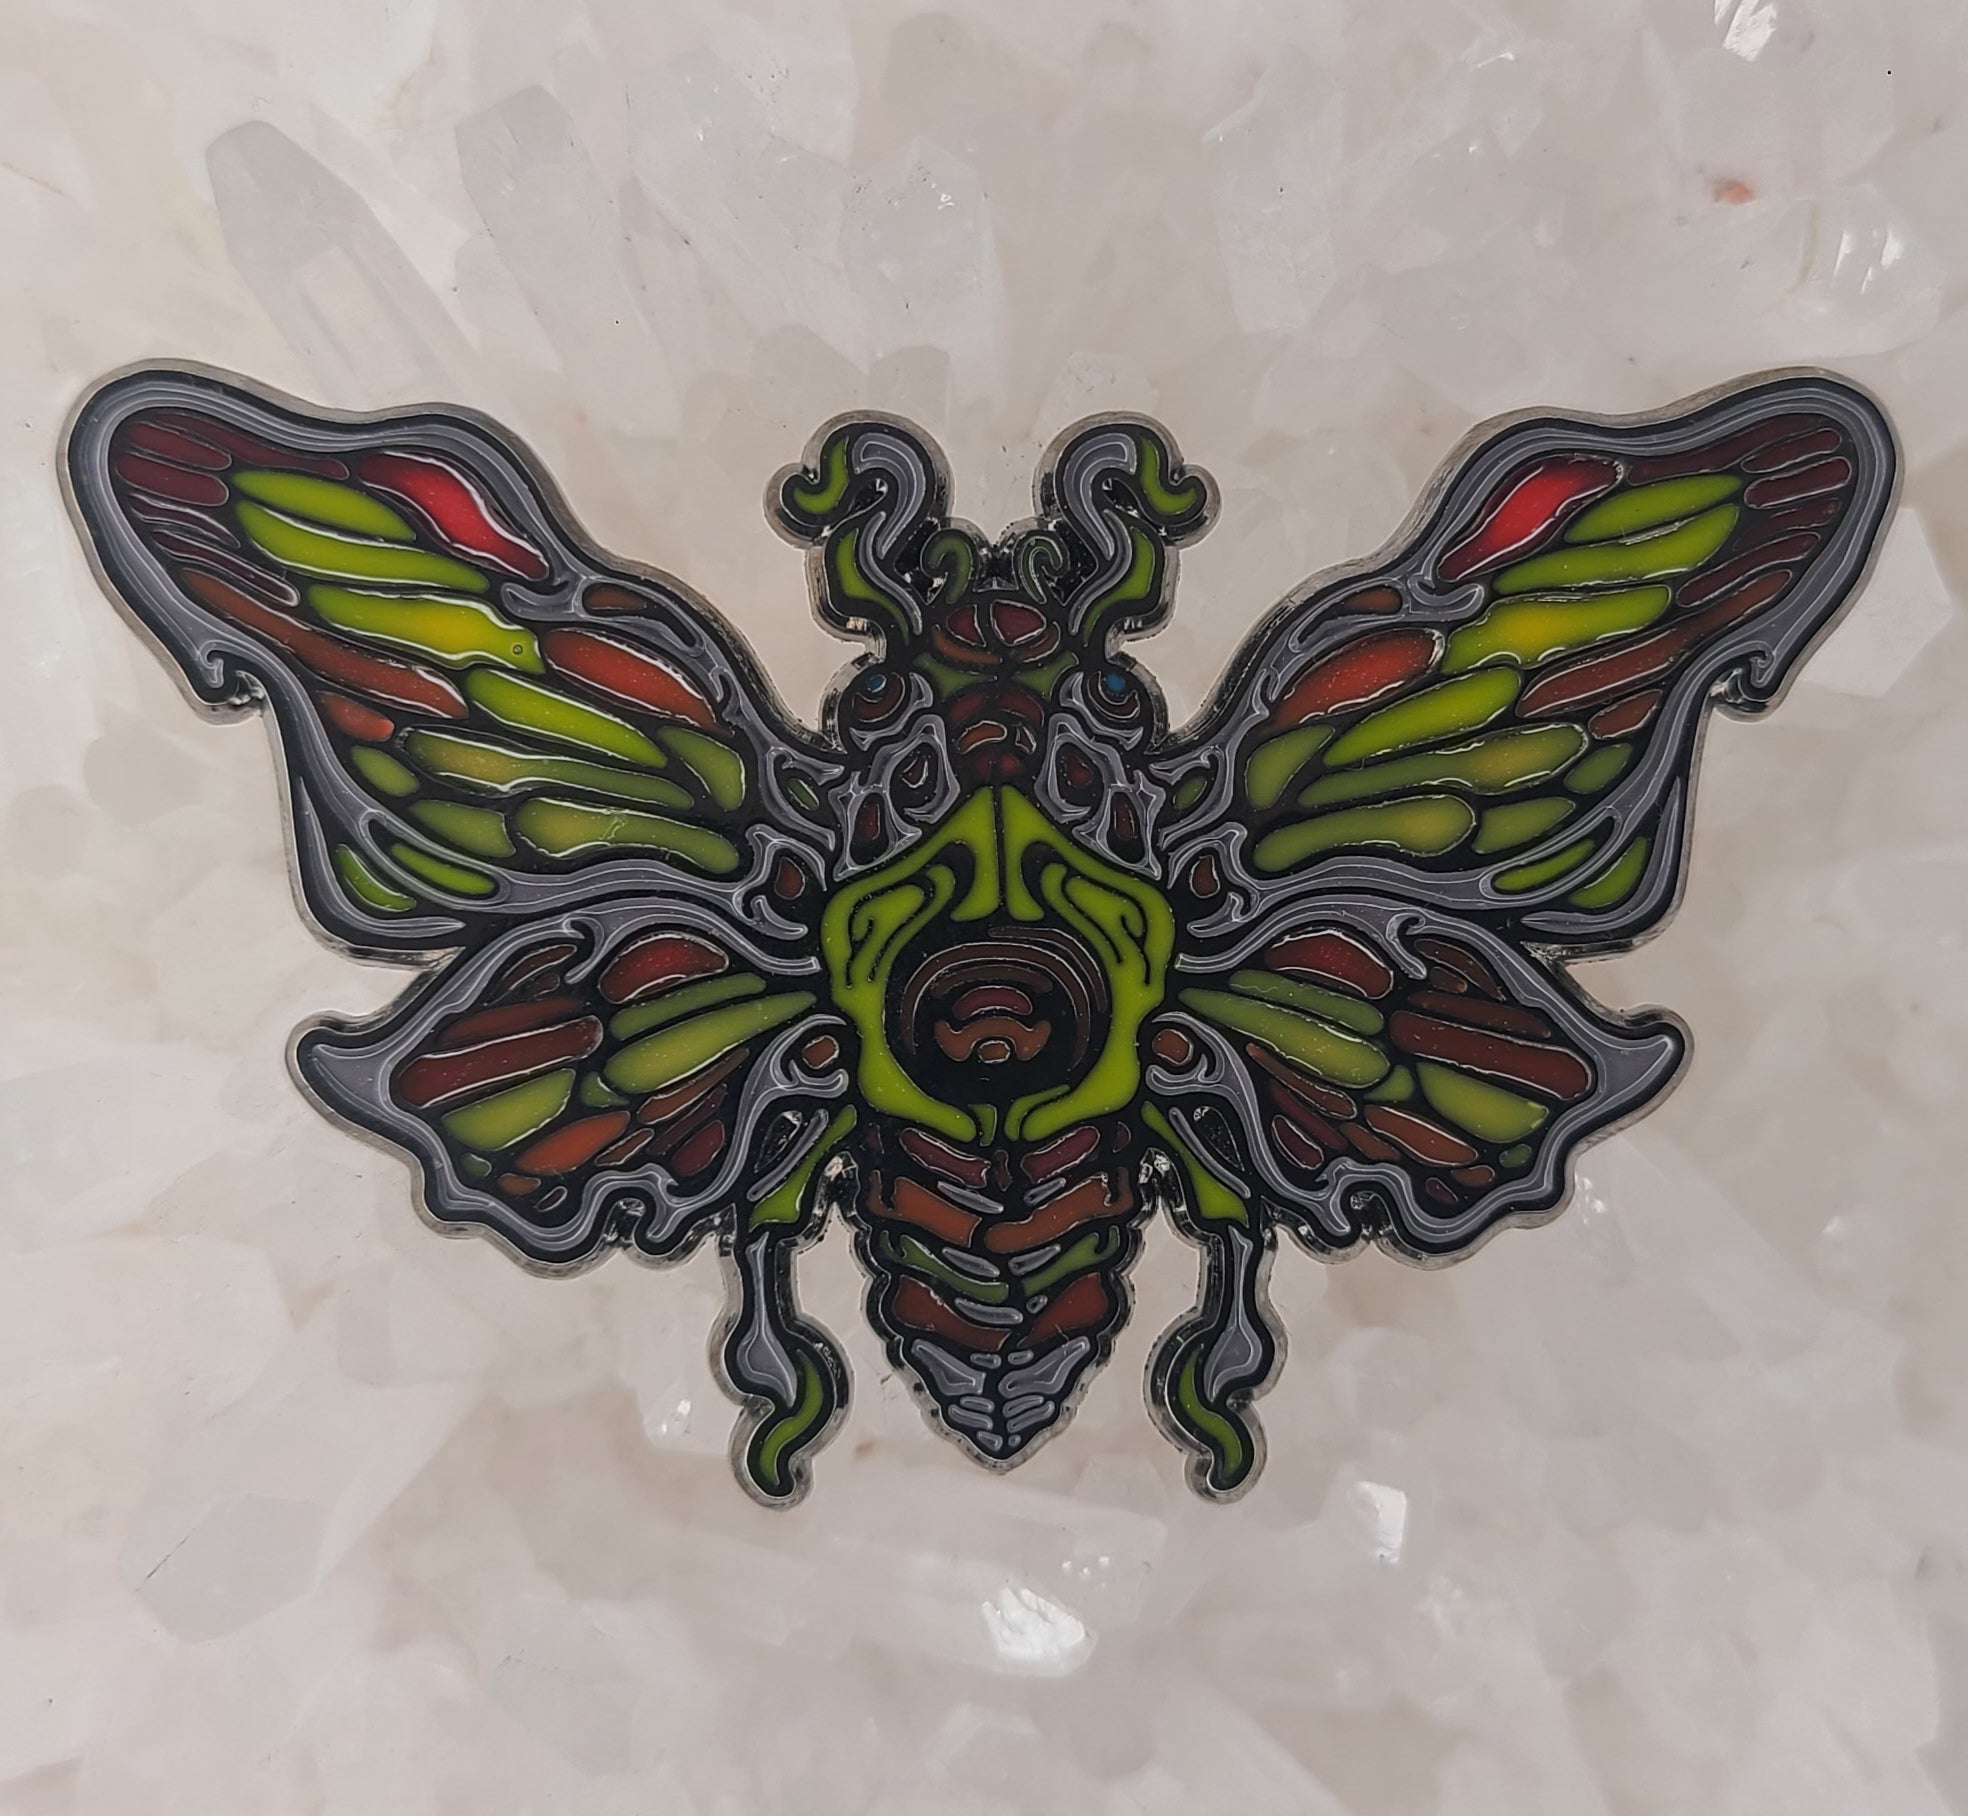 Jade Cicada Stained Glass Butterfly Moth Edm Dj Music Enamel Pins Hat Pins Lapel Pin Brooch Badge Festival Pin